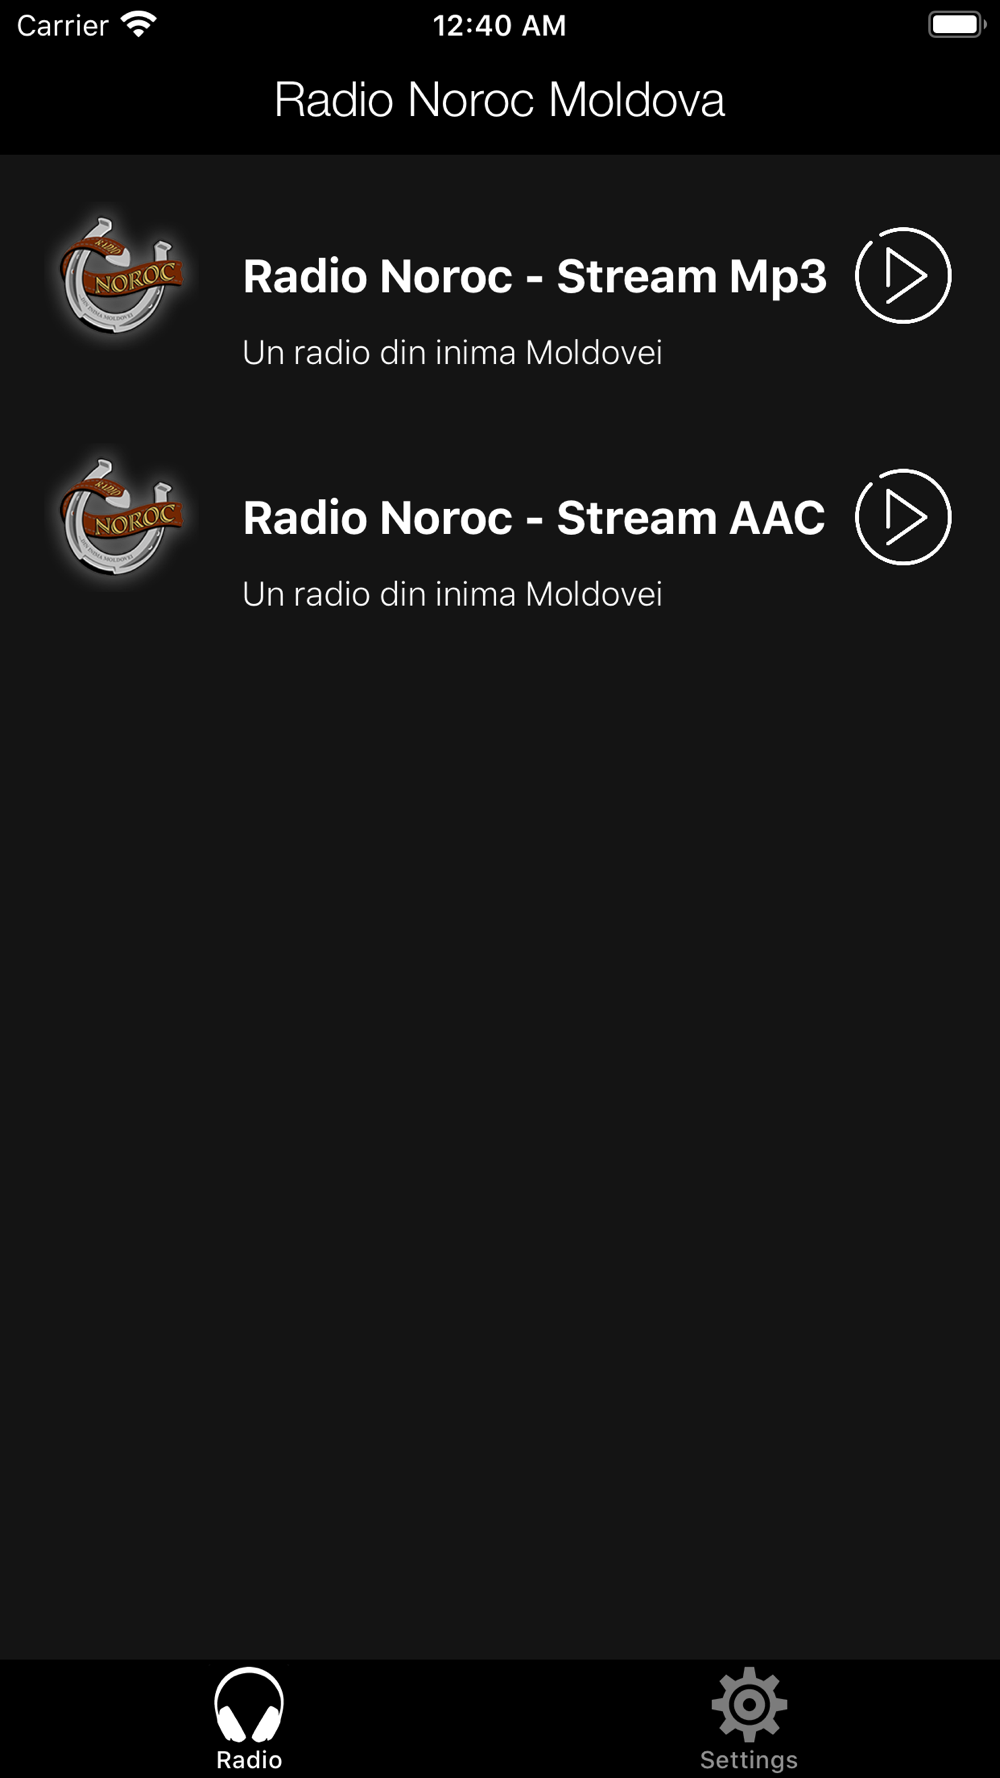 Radio Noroc Moldova Free Download App for iPhone - STEPrimo.com